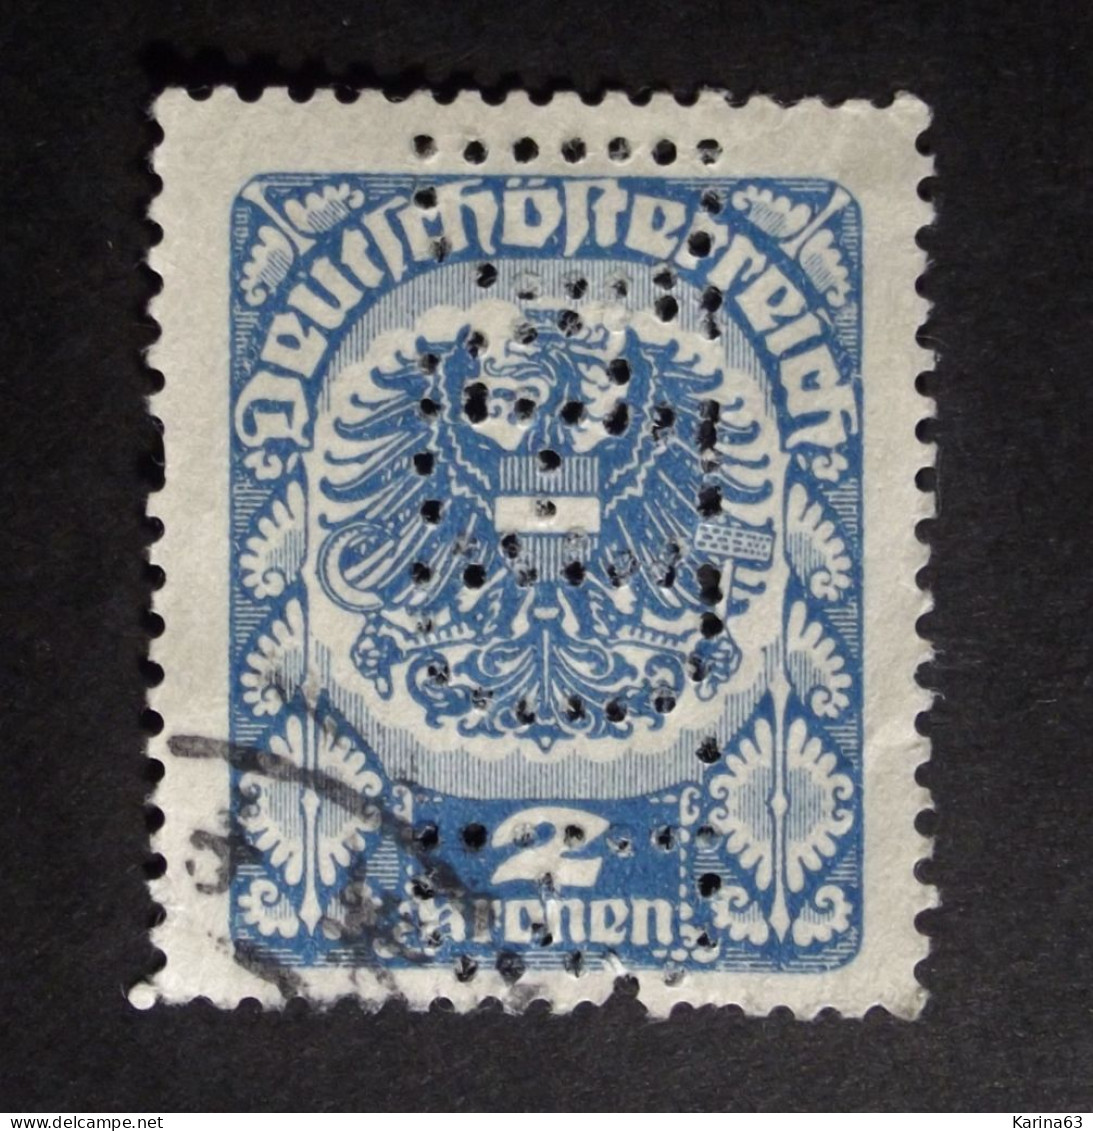 Österreich - Autriche - Oostenrijk - Perfin - Lochung  - DABD. B - Cancelled - Used Stamps